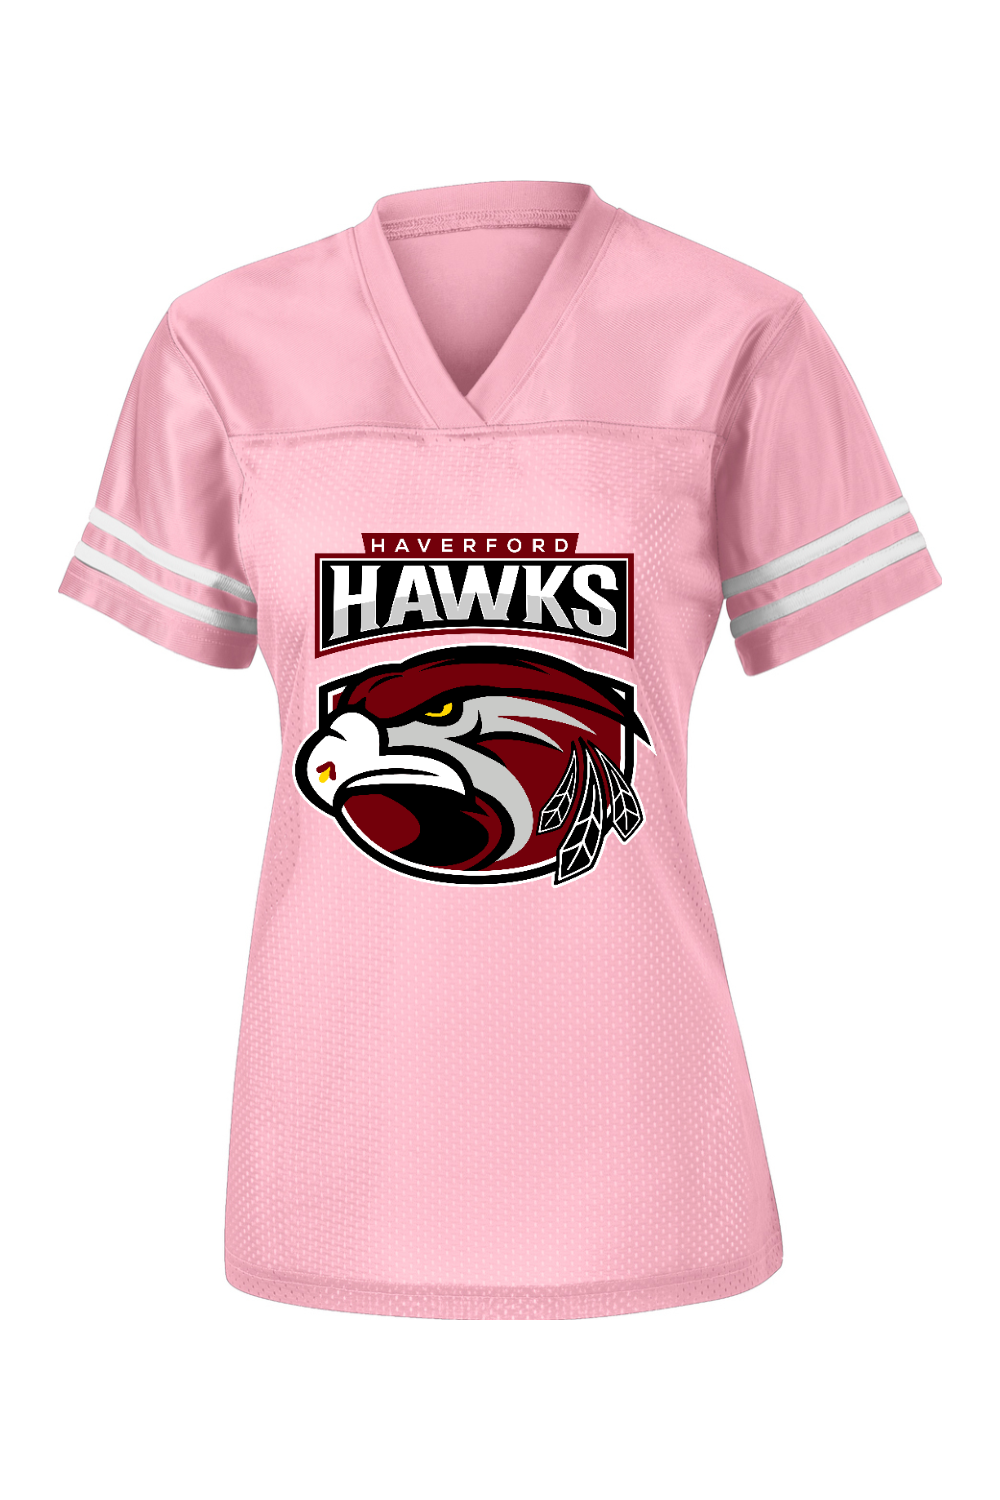 Hawks Sport-Tek Ladies Replica Jersey